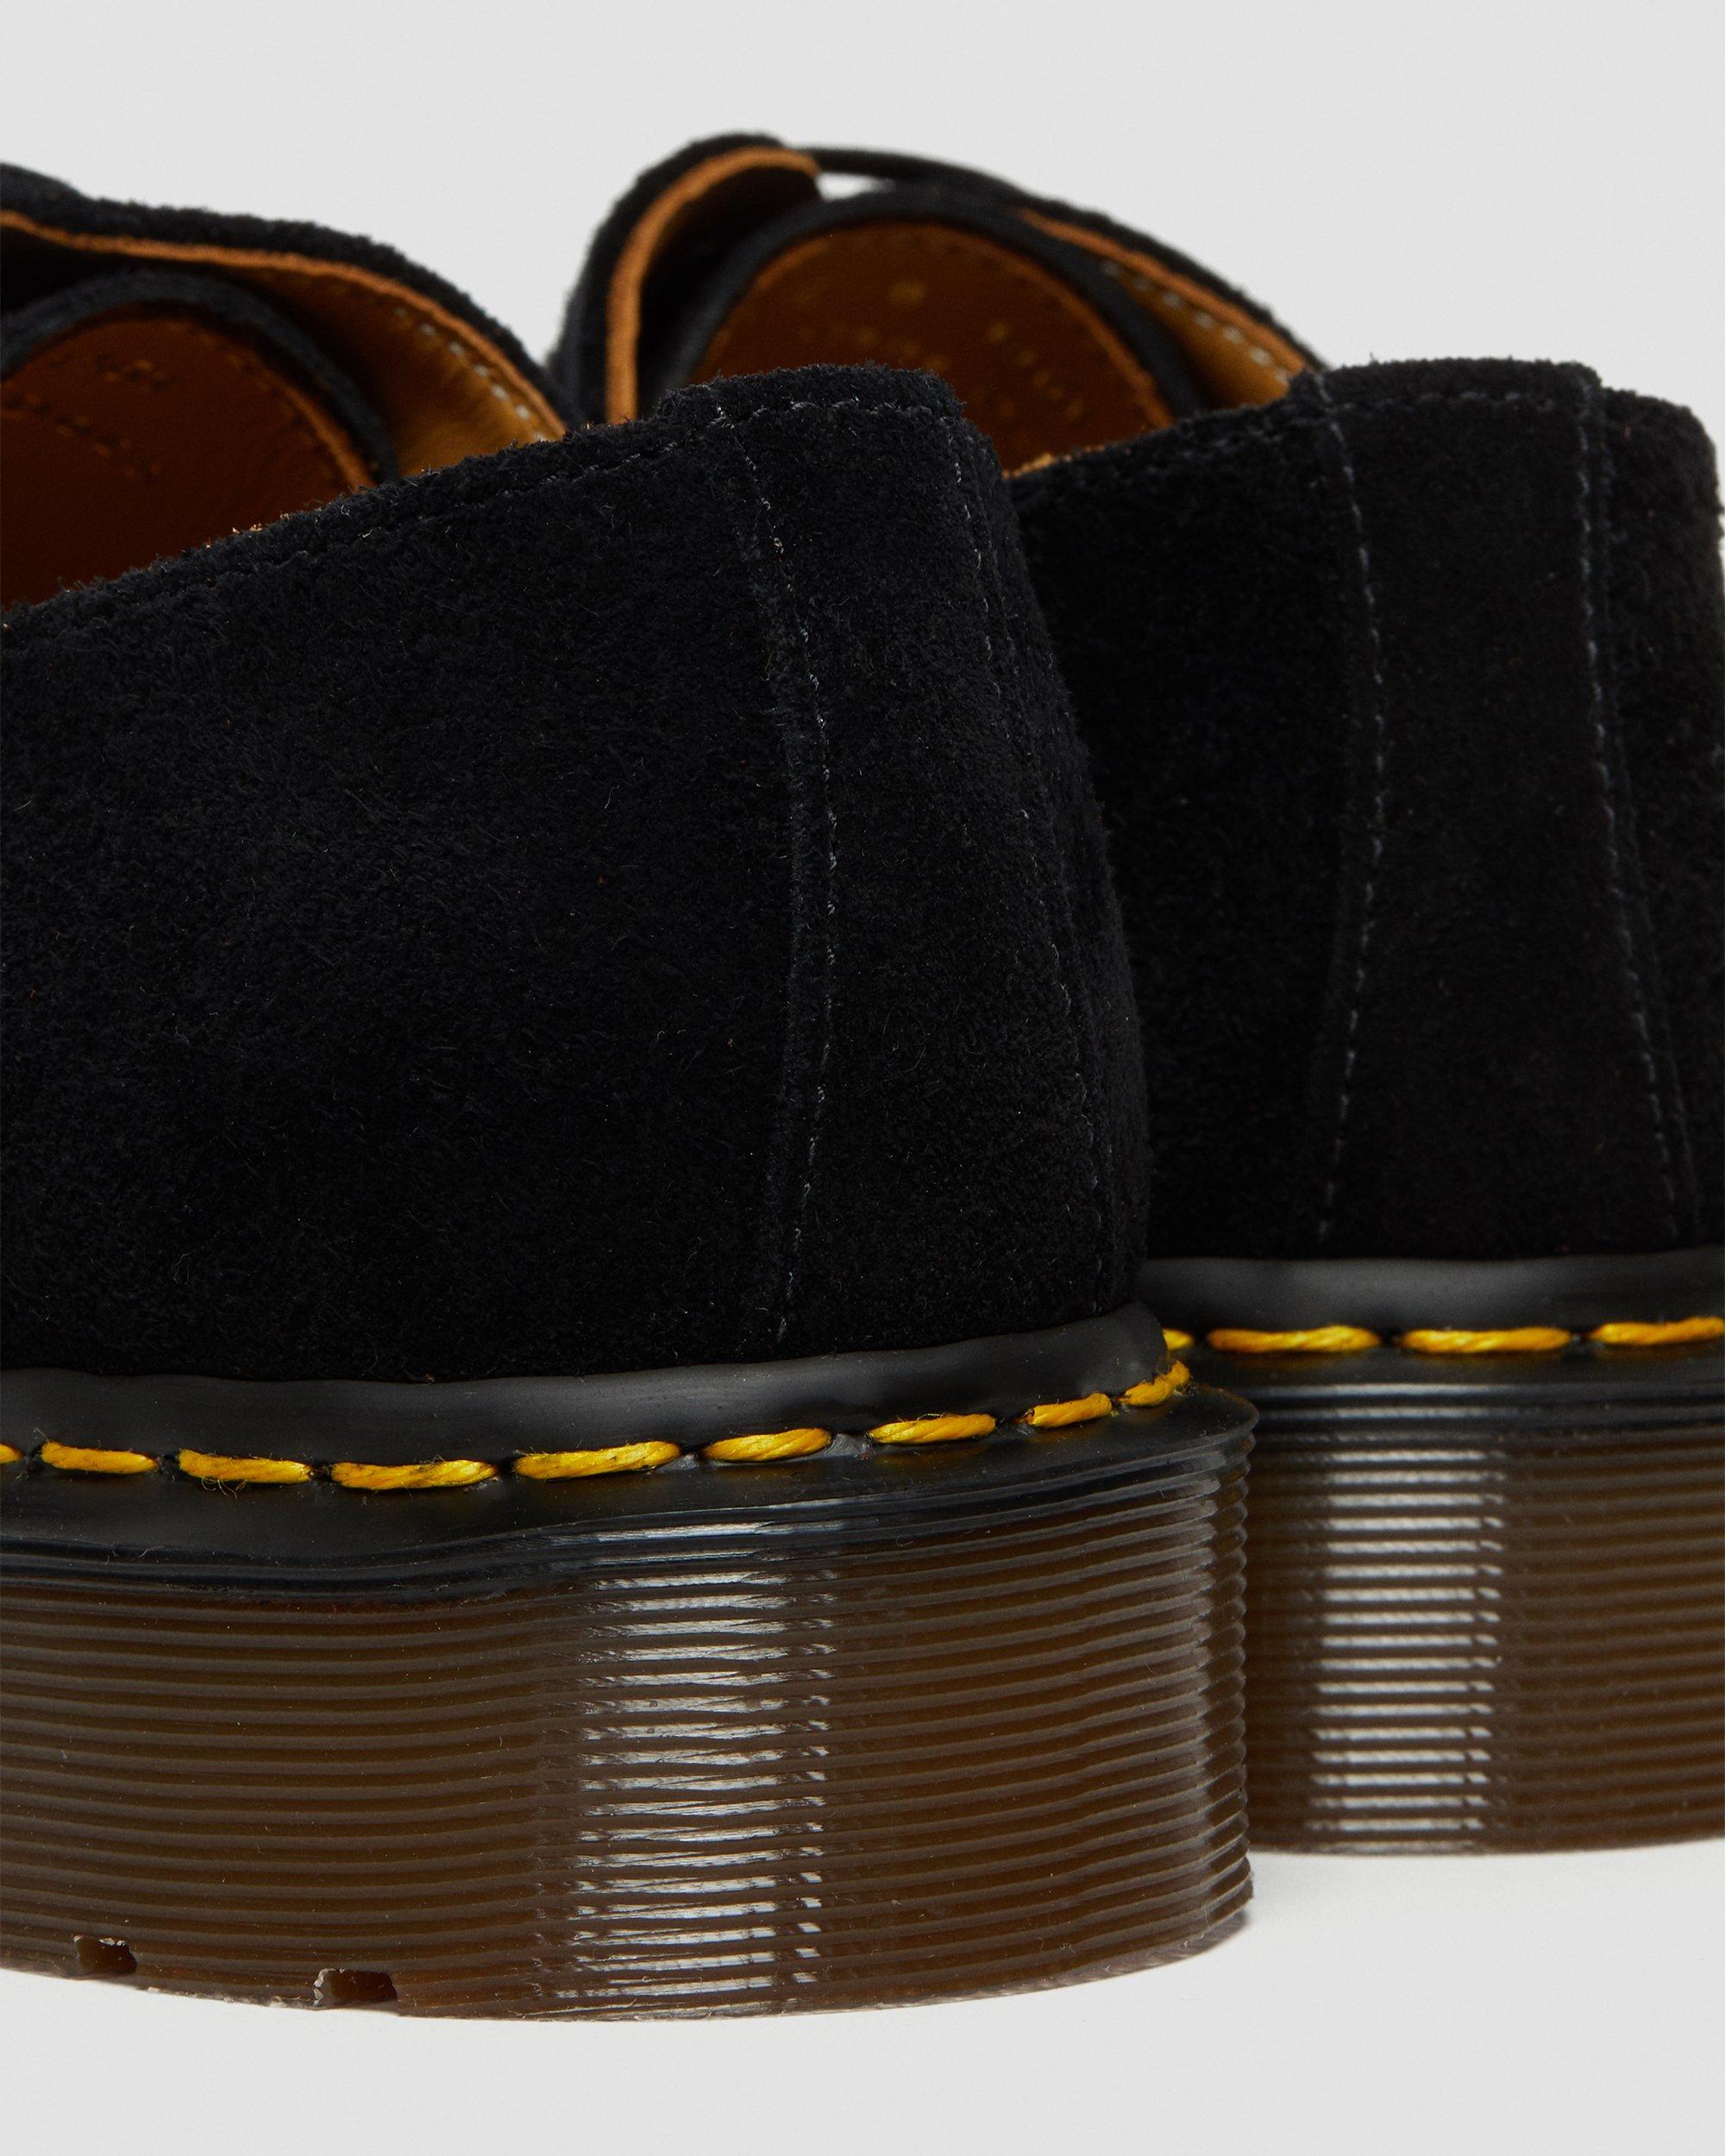 Dr Martens Made in England Black Suede 'Desert Oasis' UK9 EU43 Shoes Mens Shoes Oxfords & Wingtips 